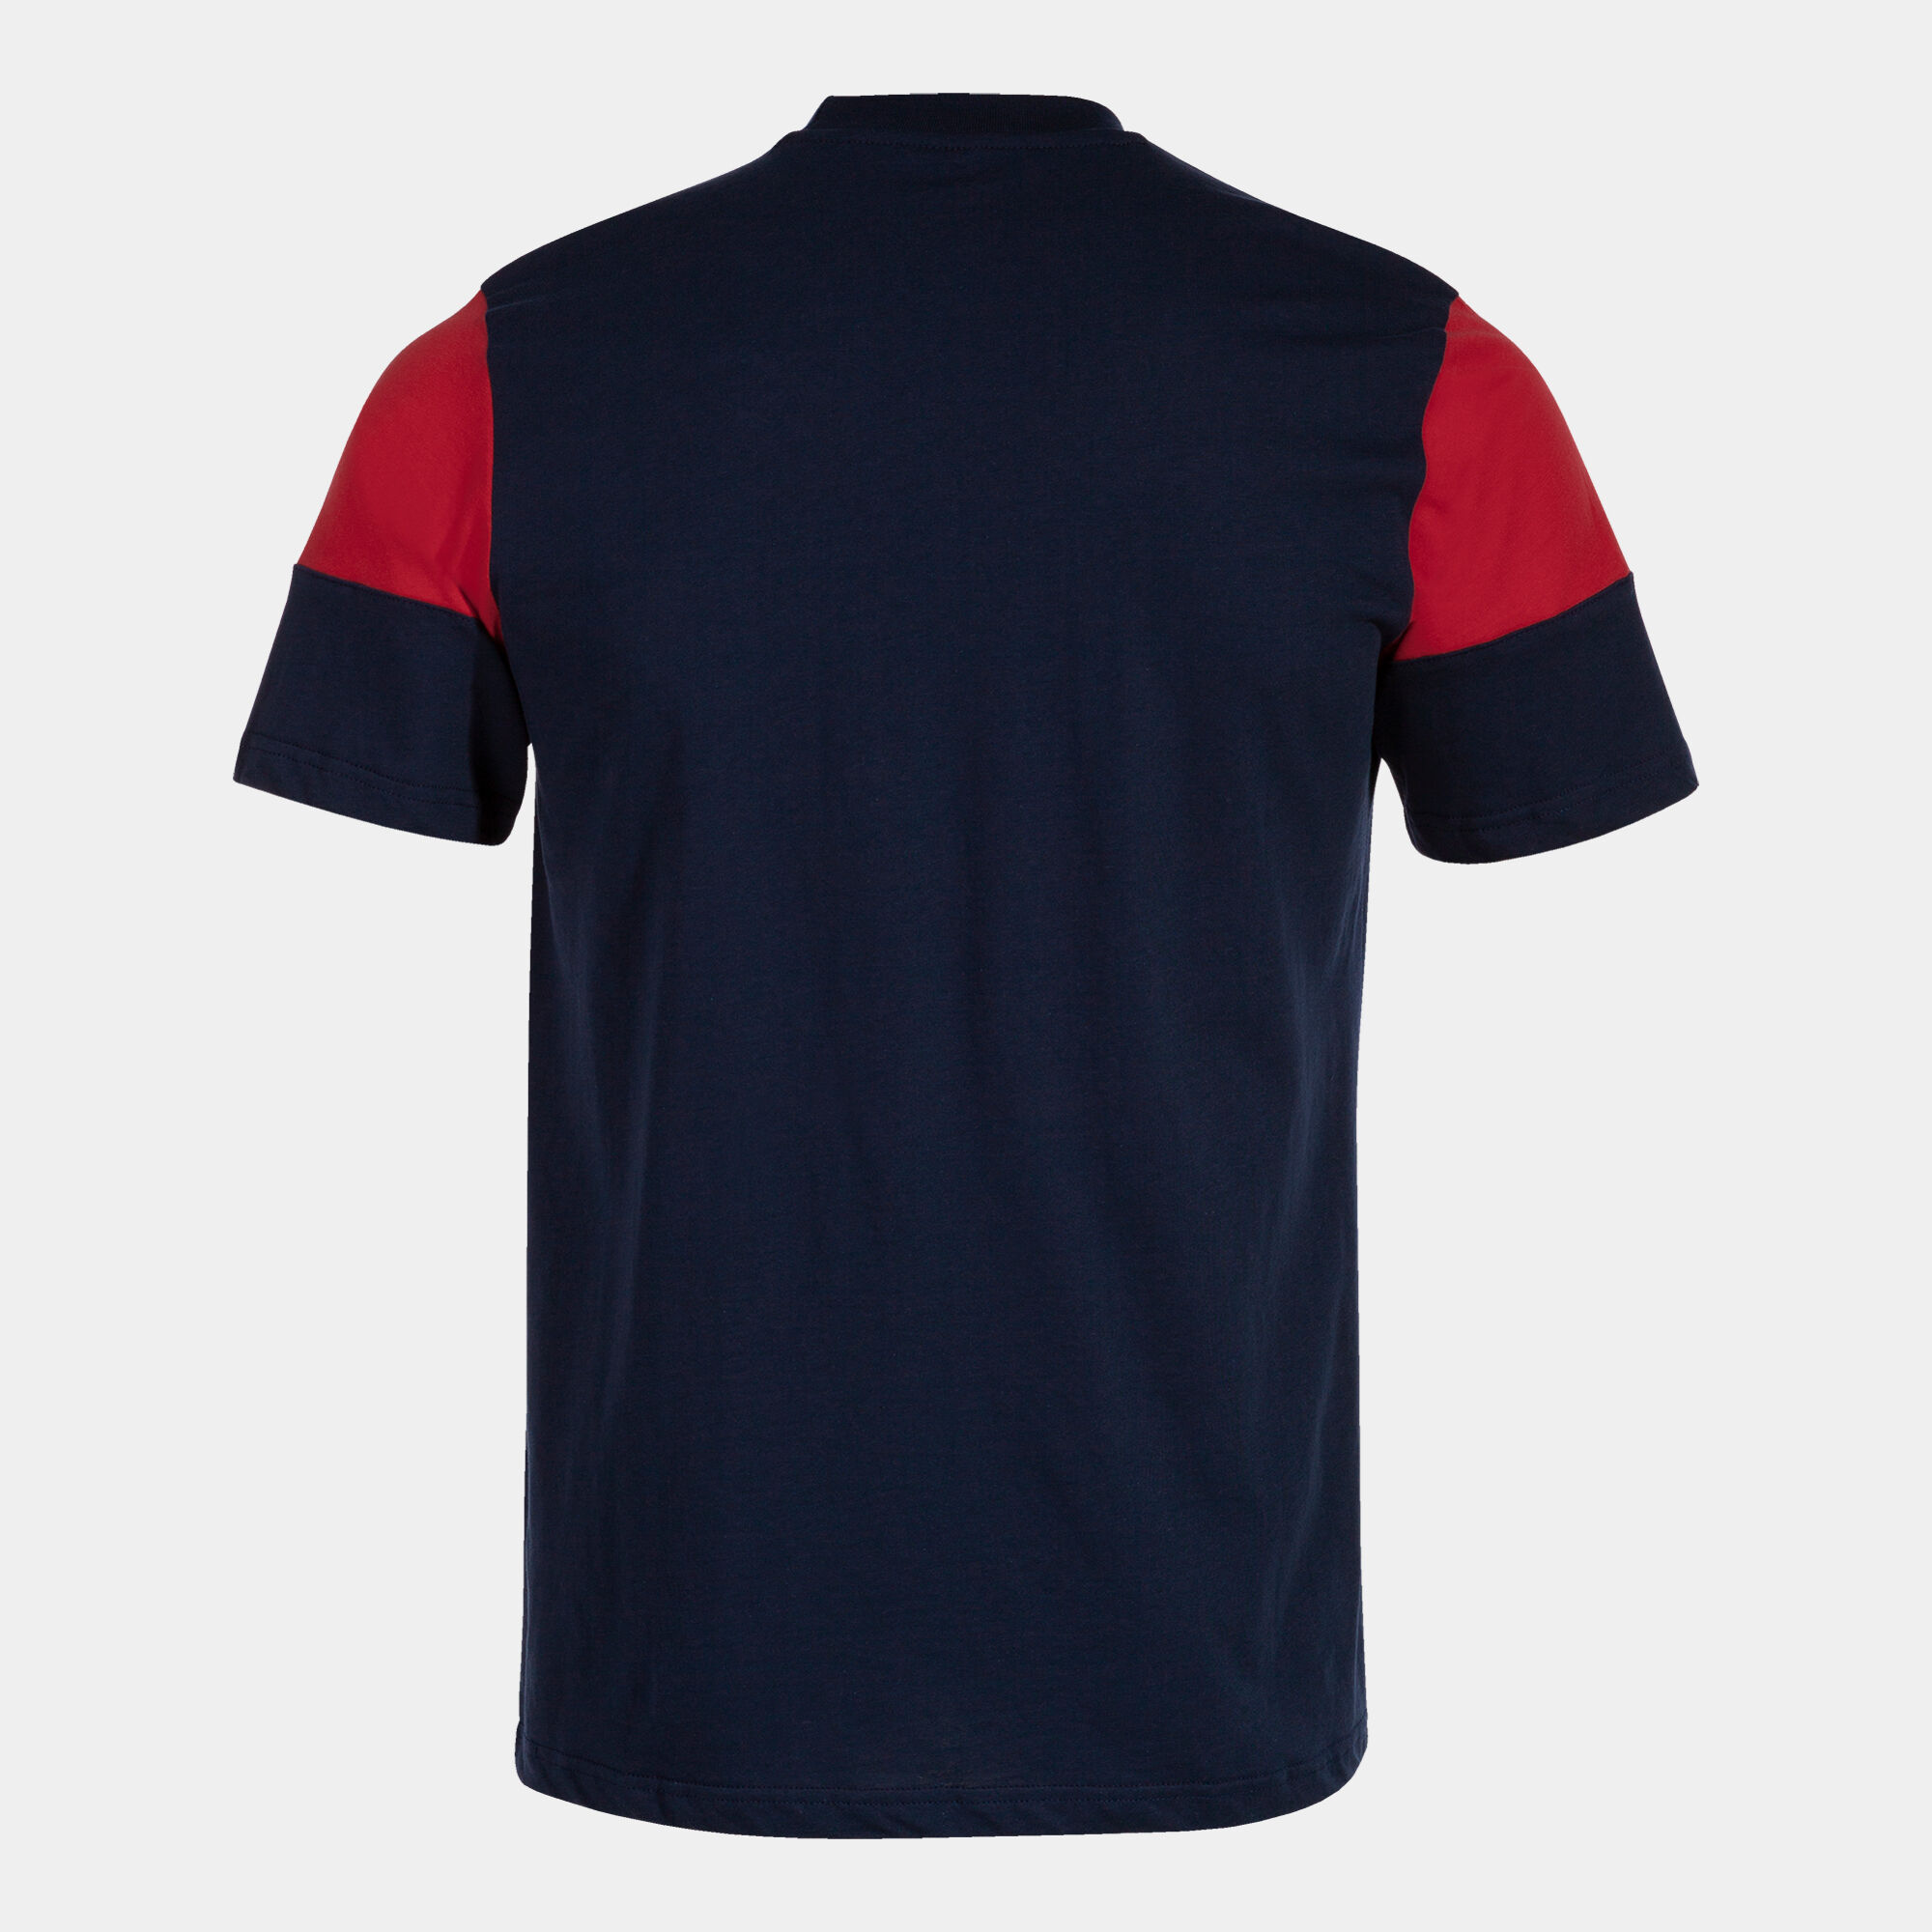 T-shirt manga curta homem Crew V azul marinho vermelho